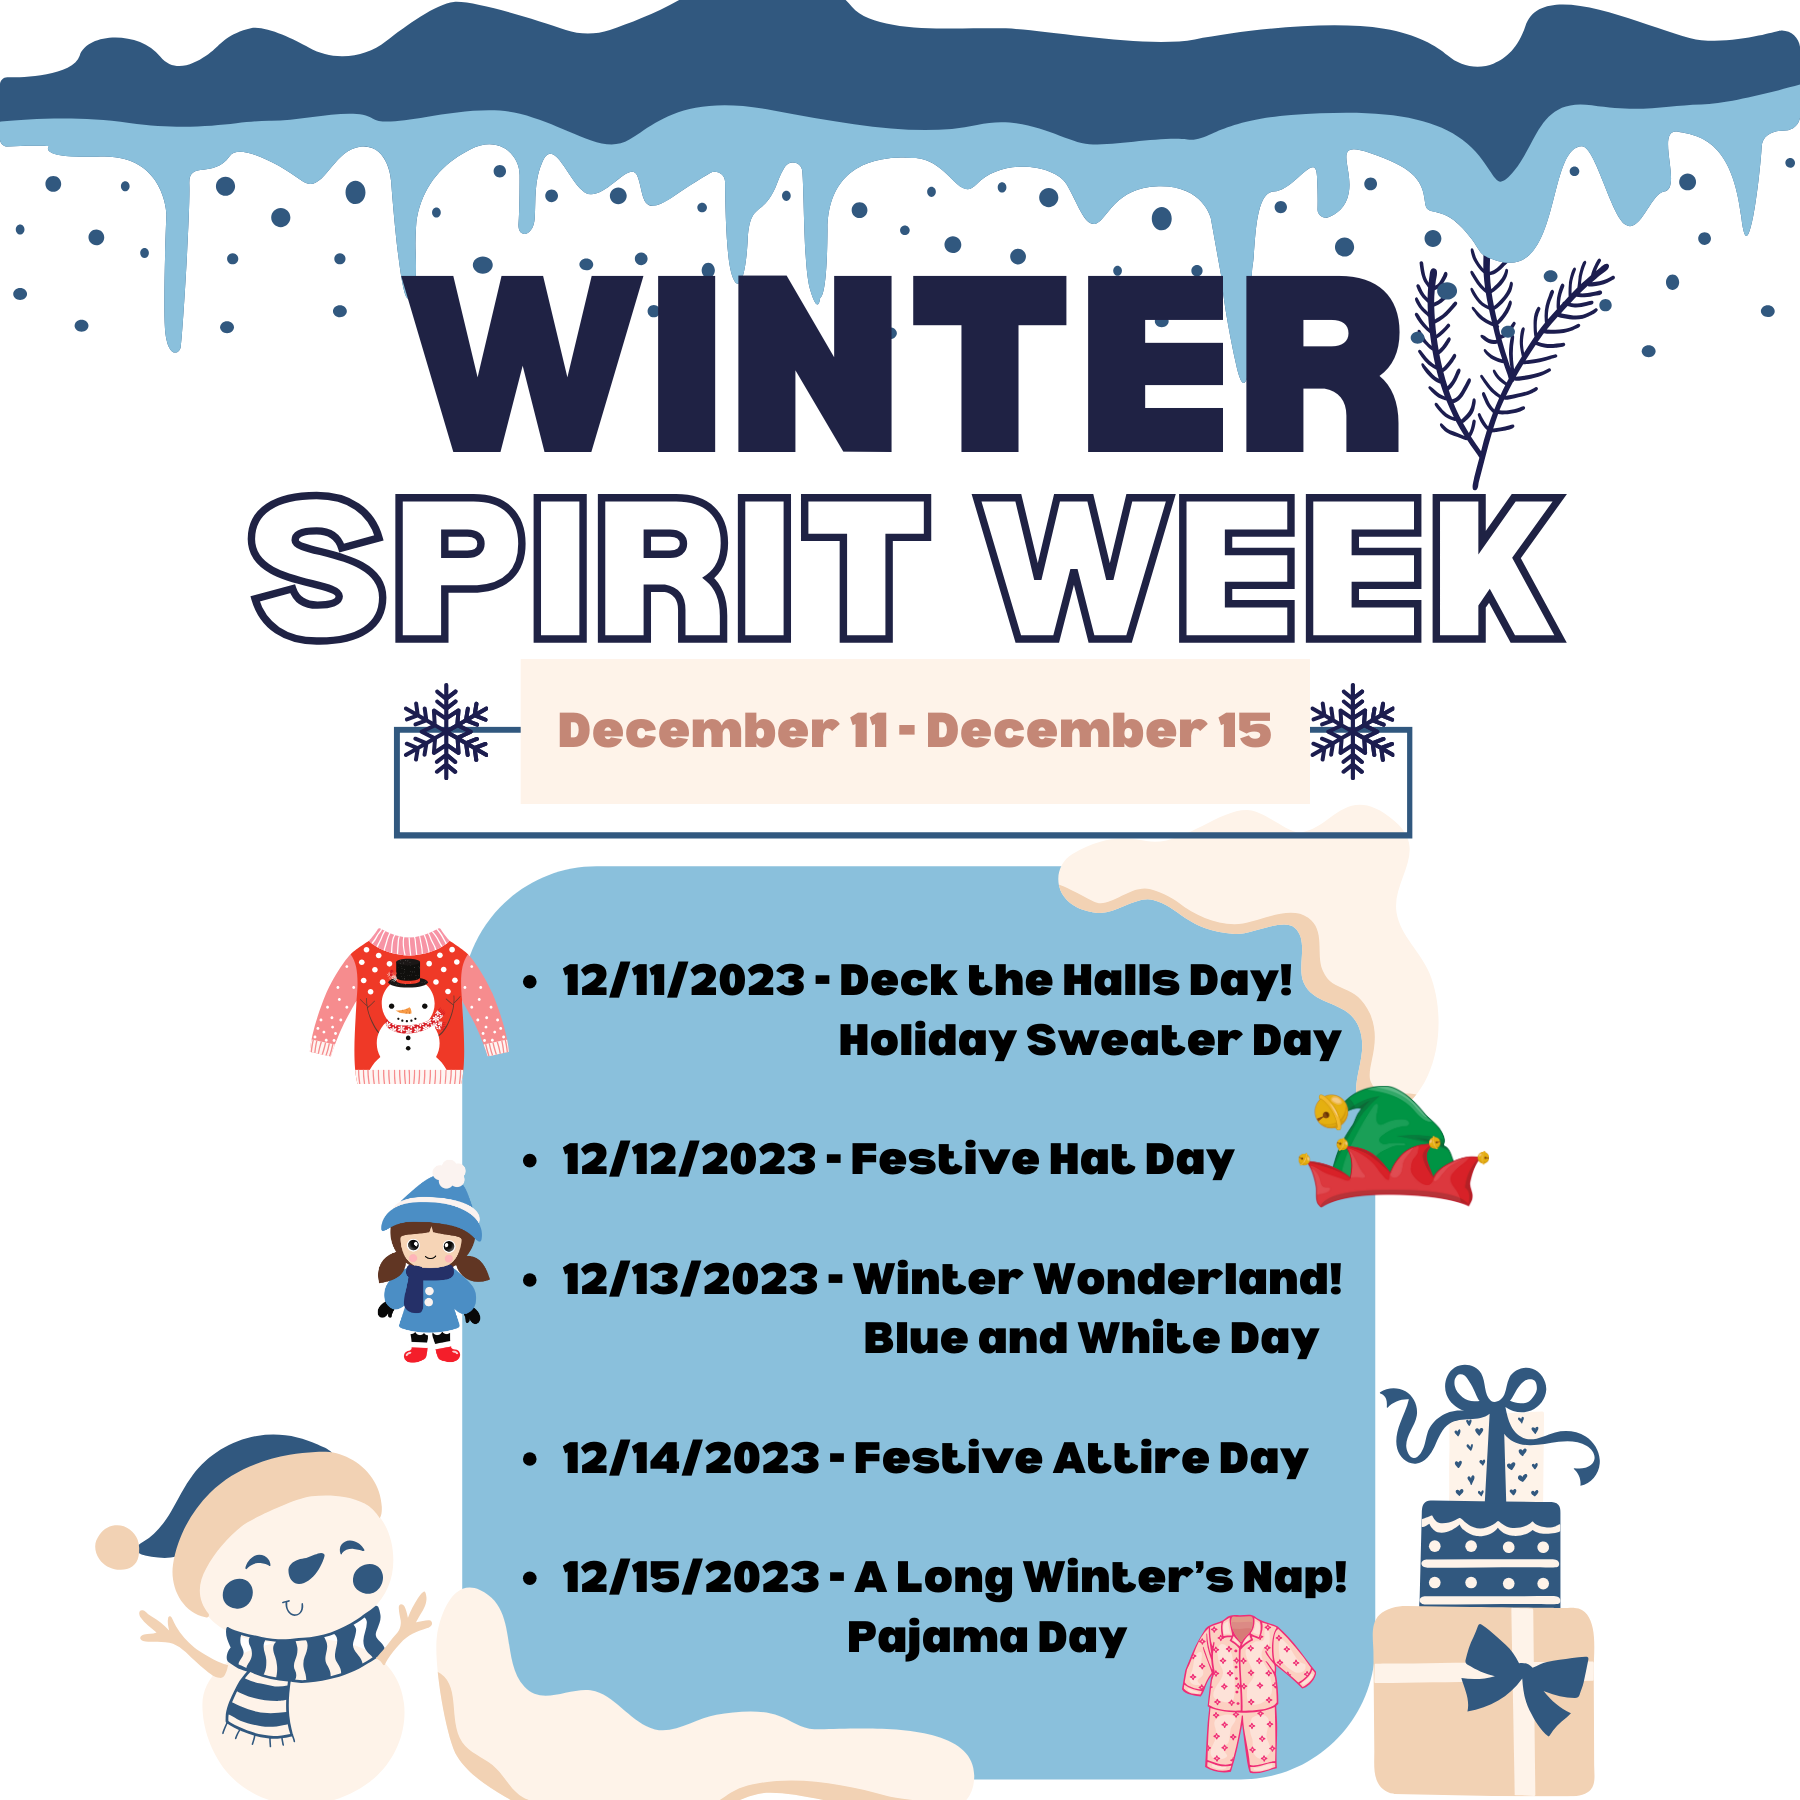 Winter Spirit Week